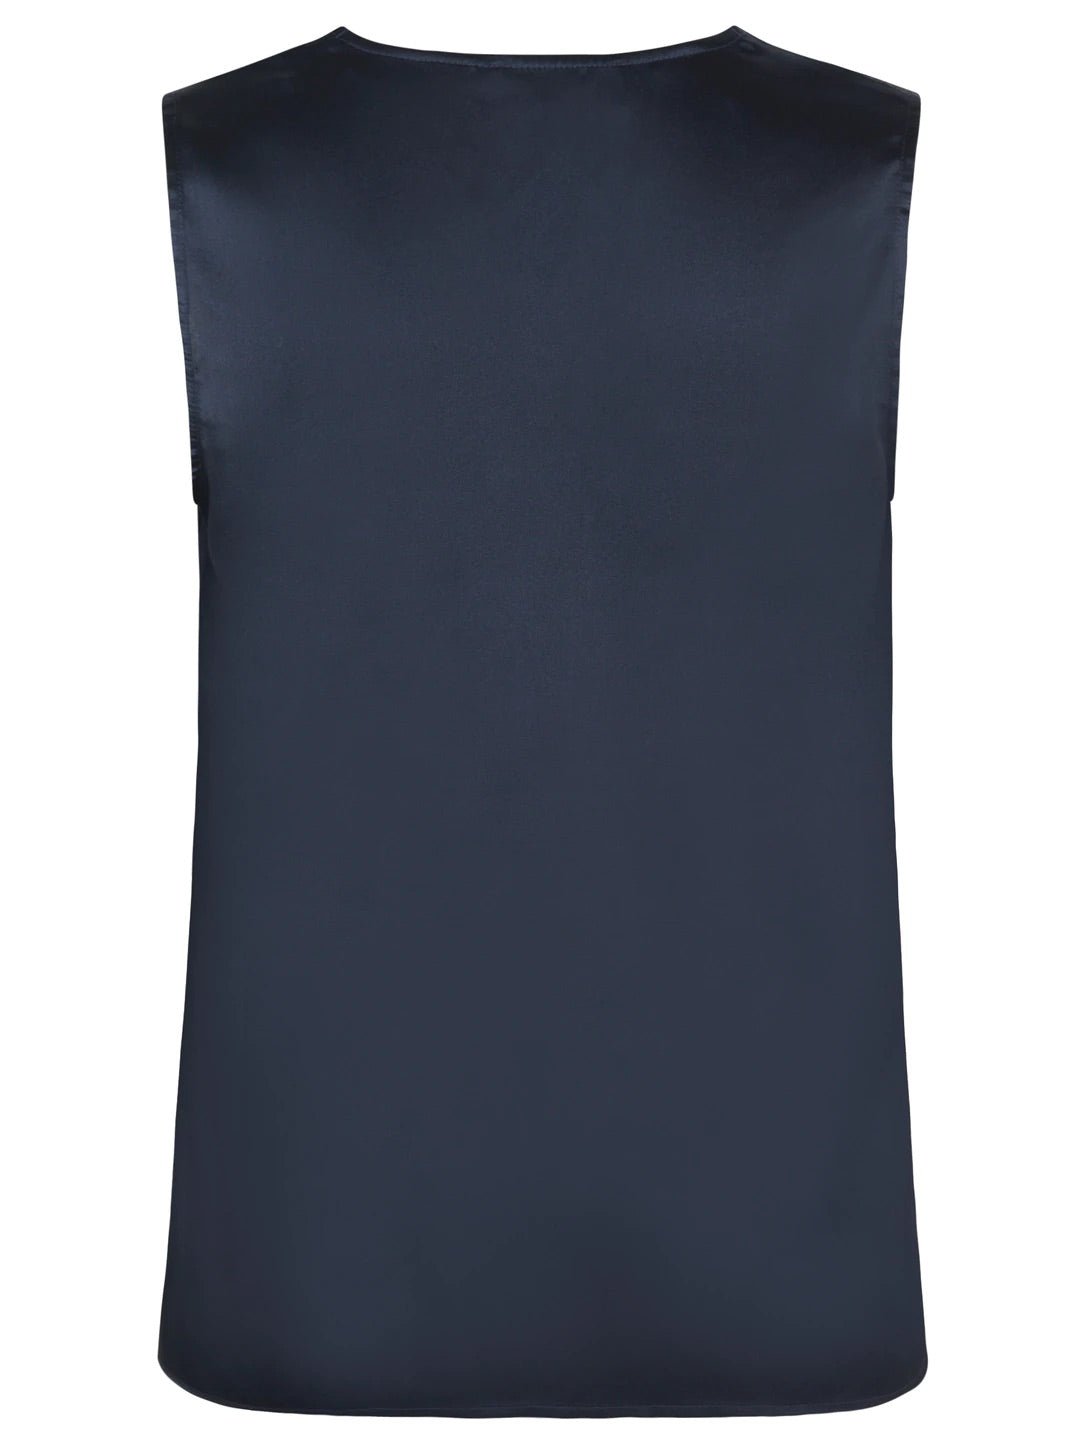 Shop Silk V-Neck Top in Dark Blue - Rosemunde